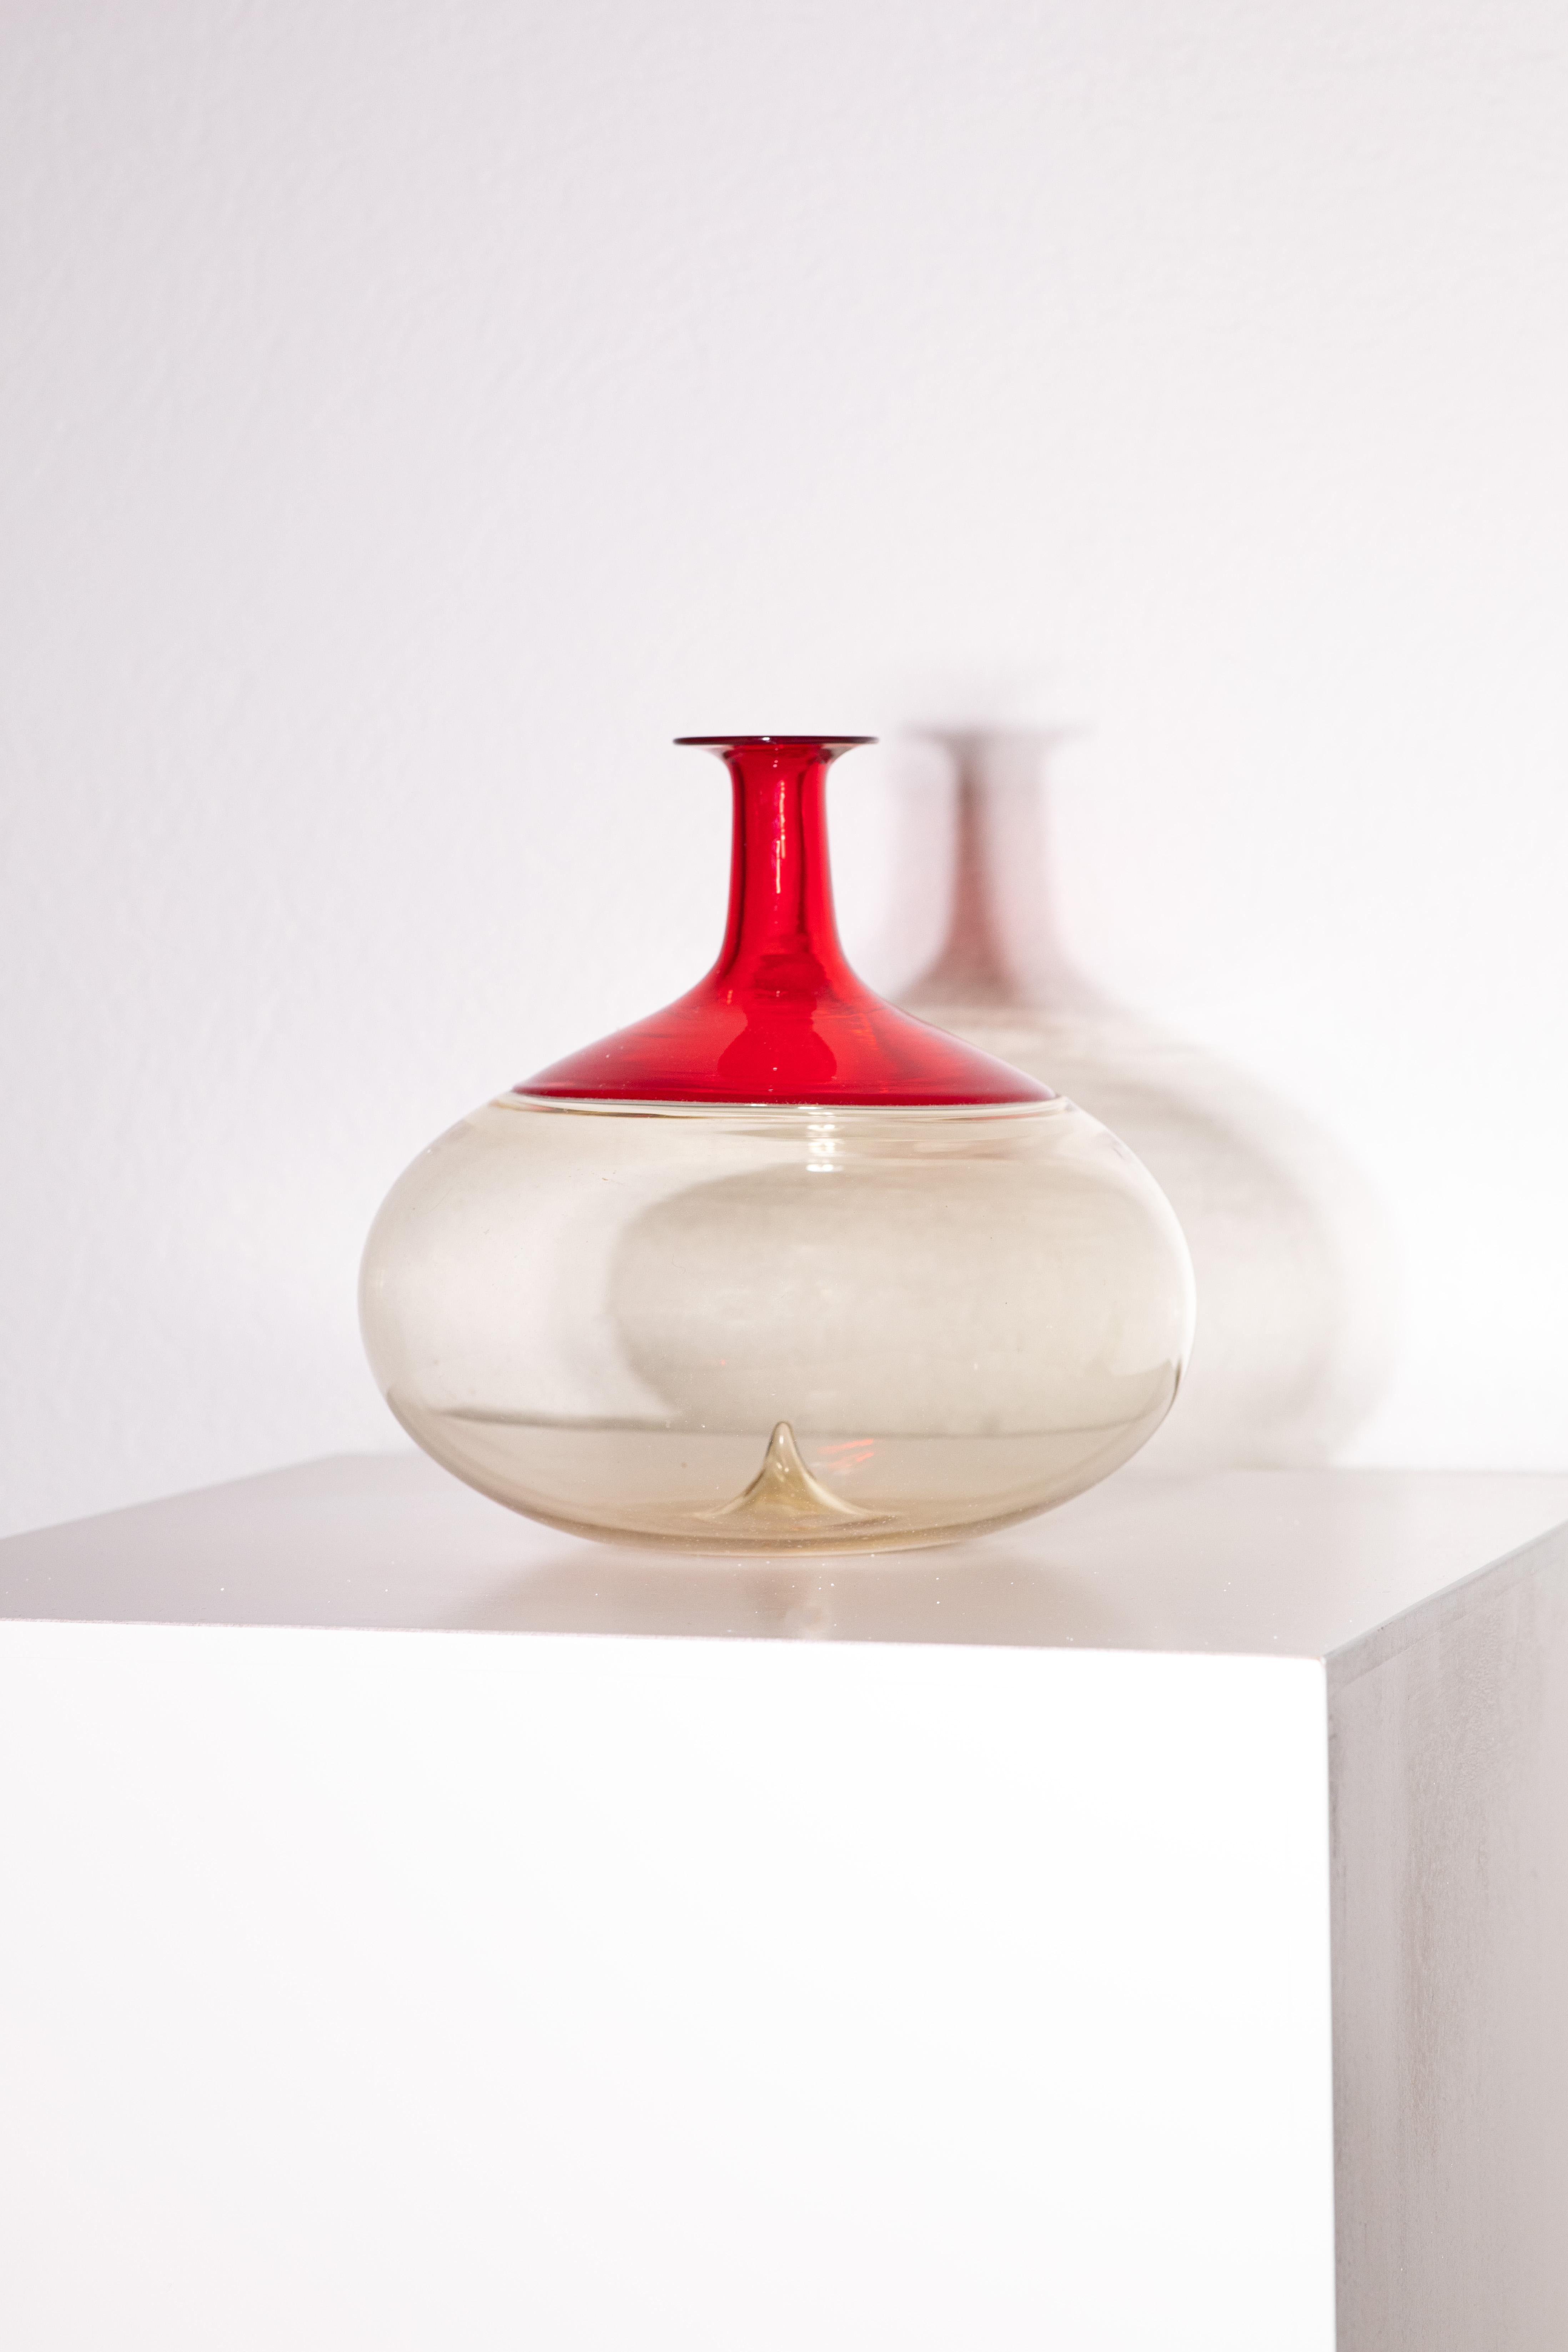 Tapio Wirkkala red Vase  In Good Condition For Sale In Collonge-Bellerive, GE